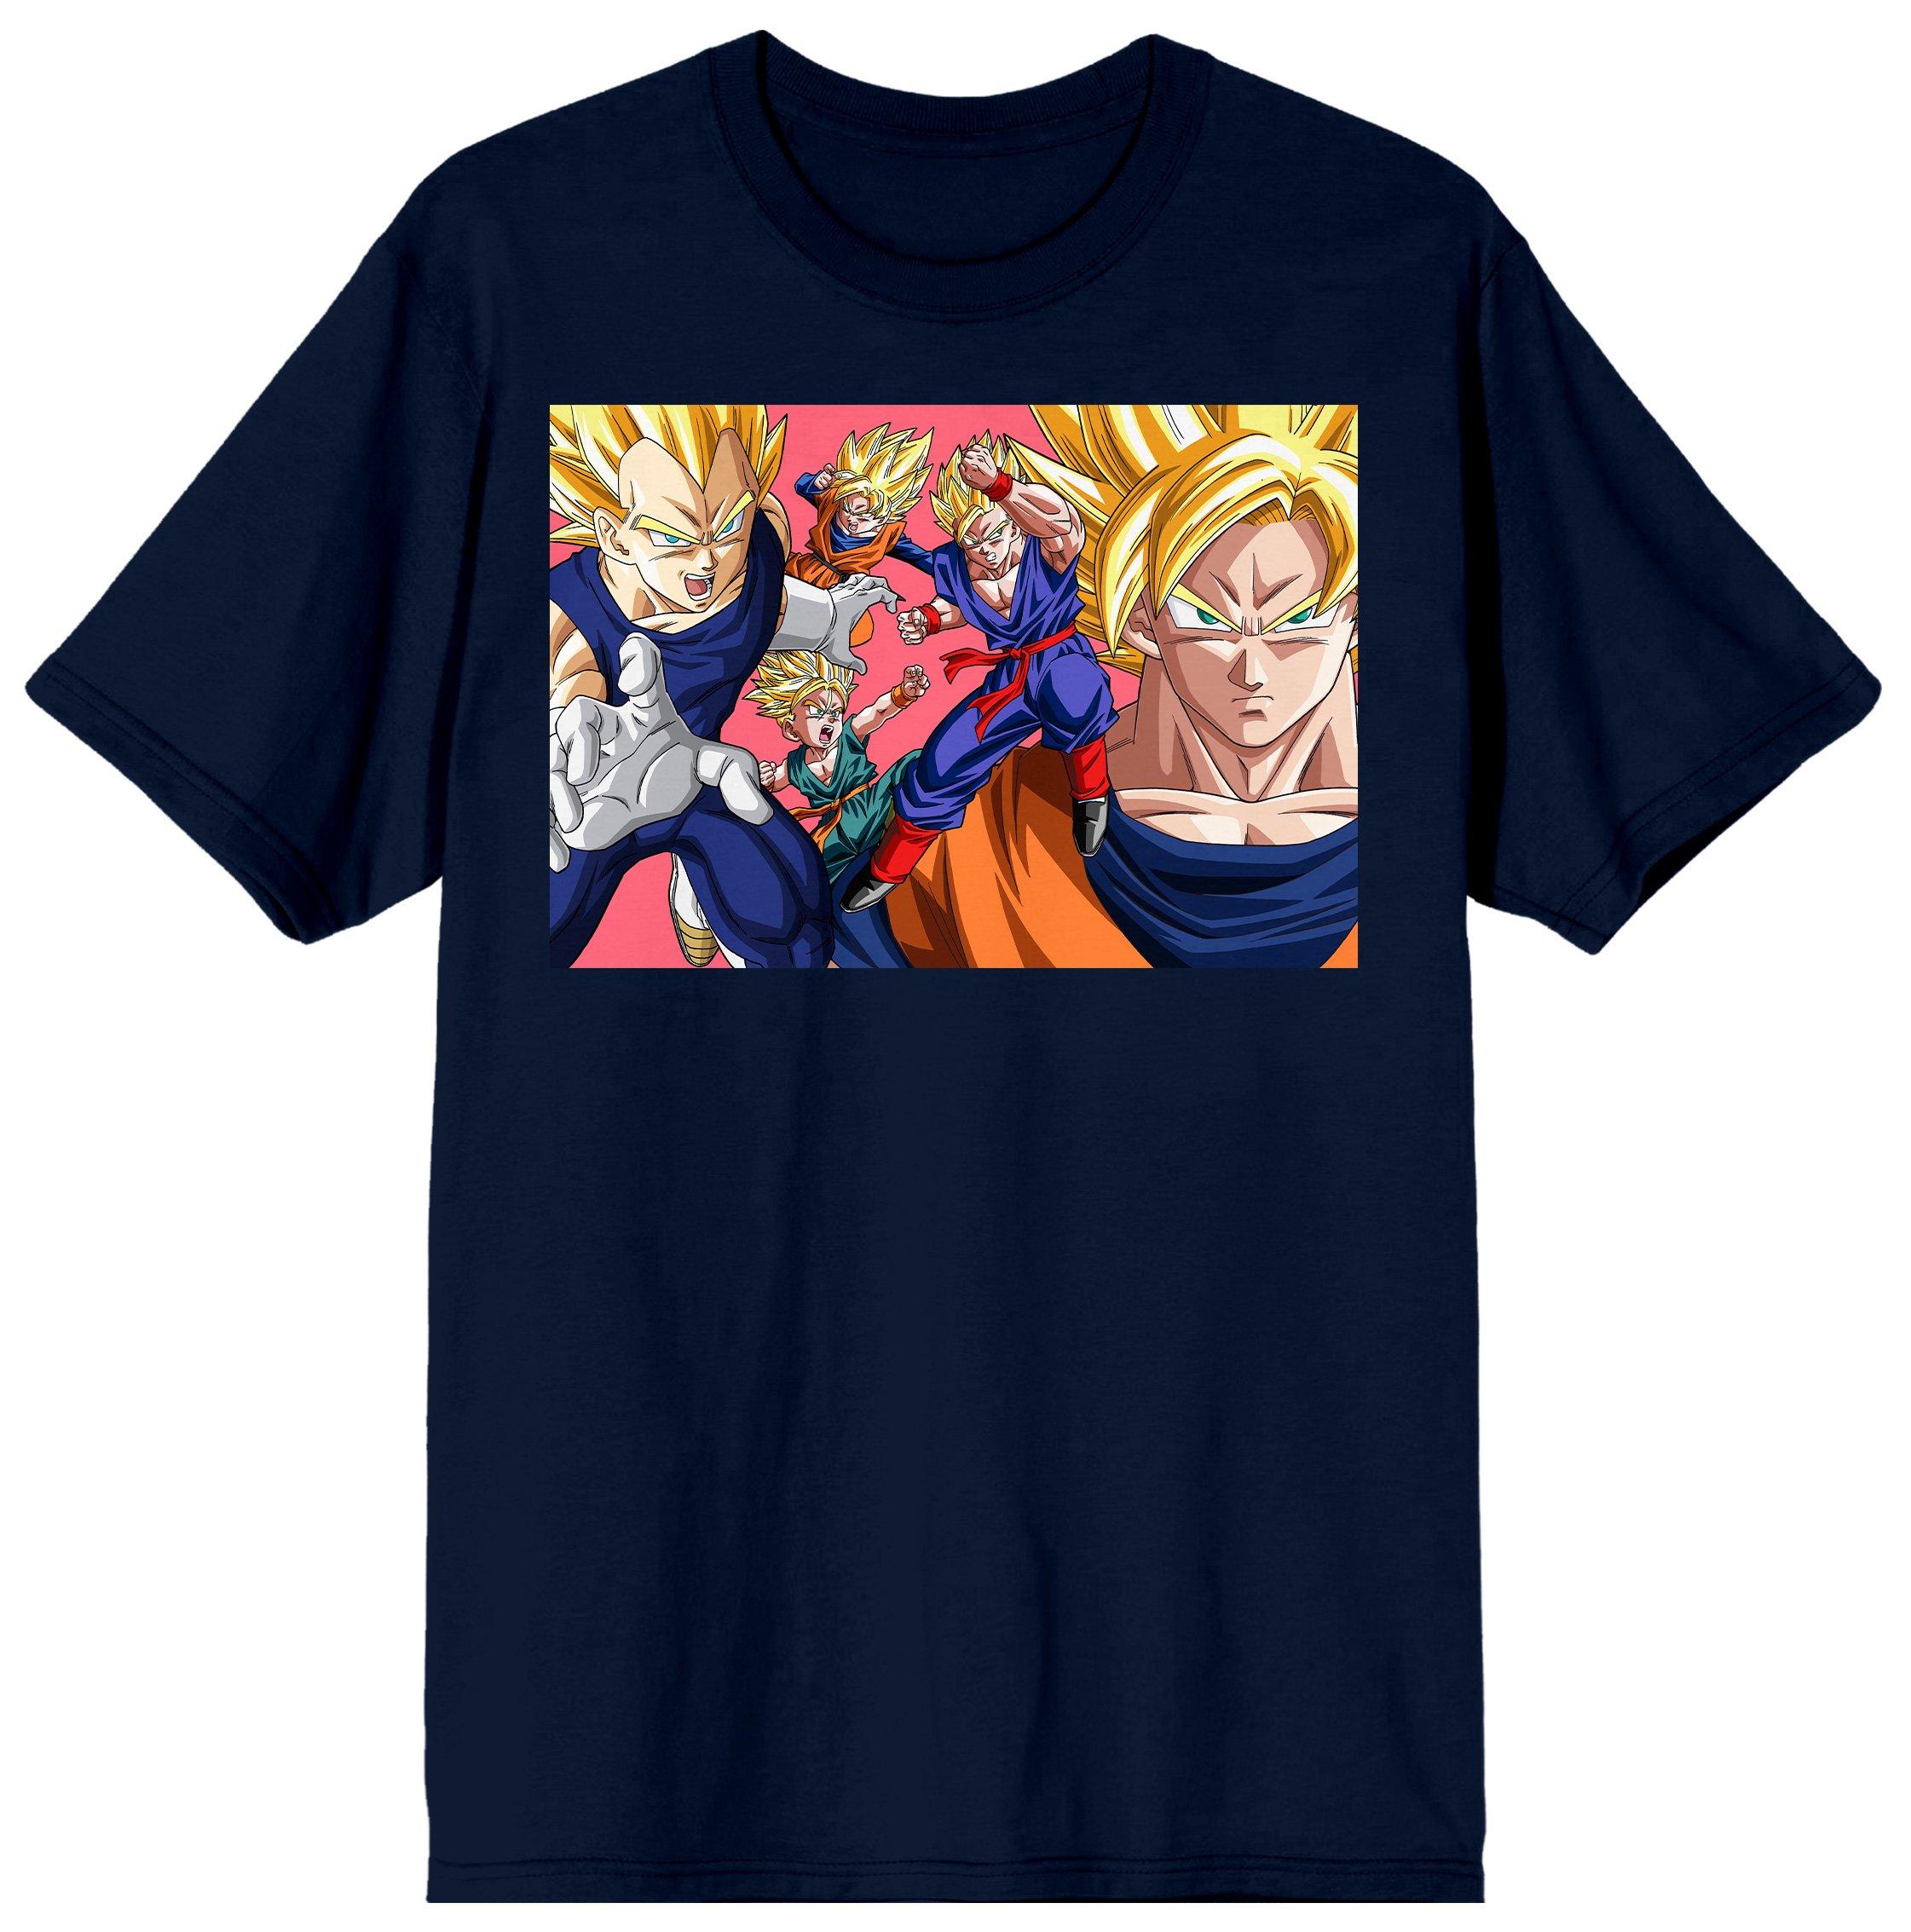 Dragon Ball Z Character Group Men's Anime Navy Blue Short Sleeve Graphic T-Shirt, Size: Small, Bioworld Merchandising